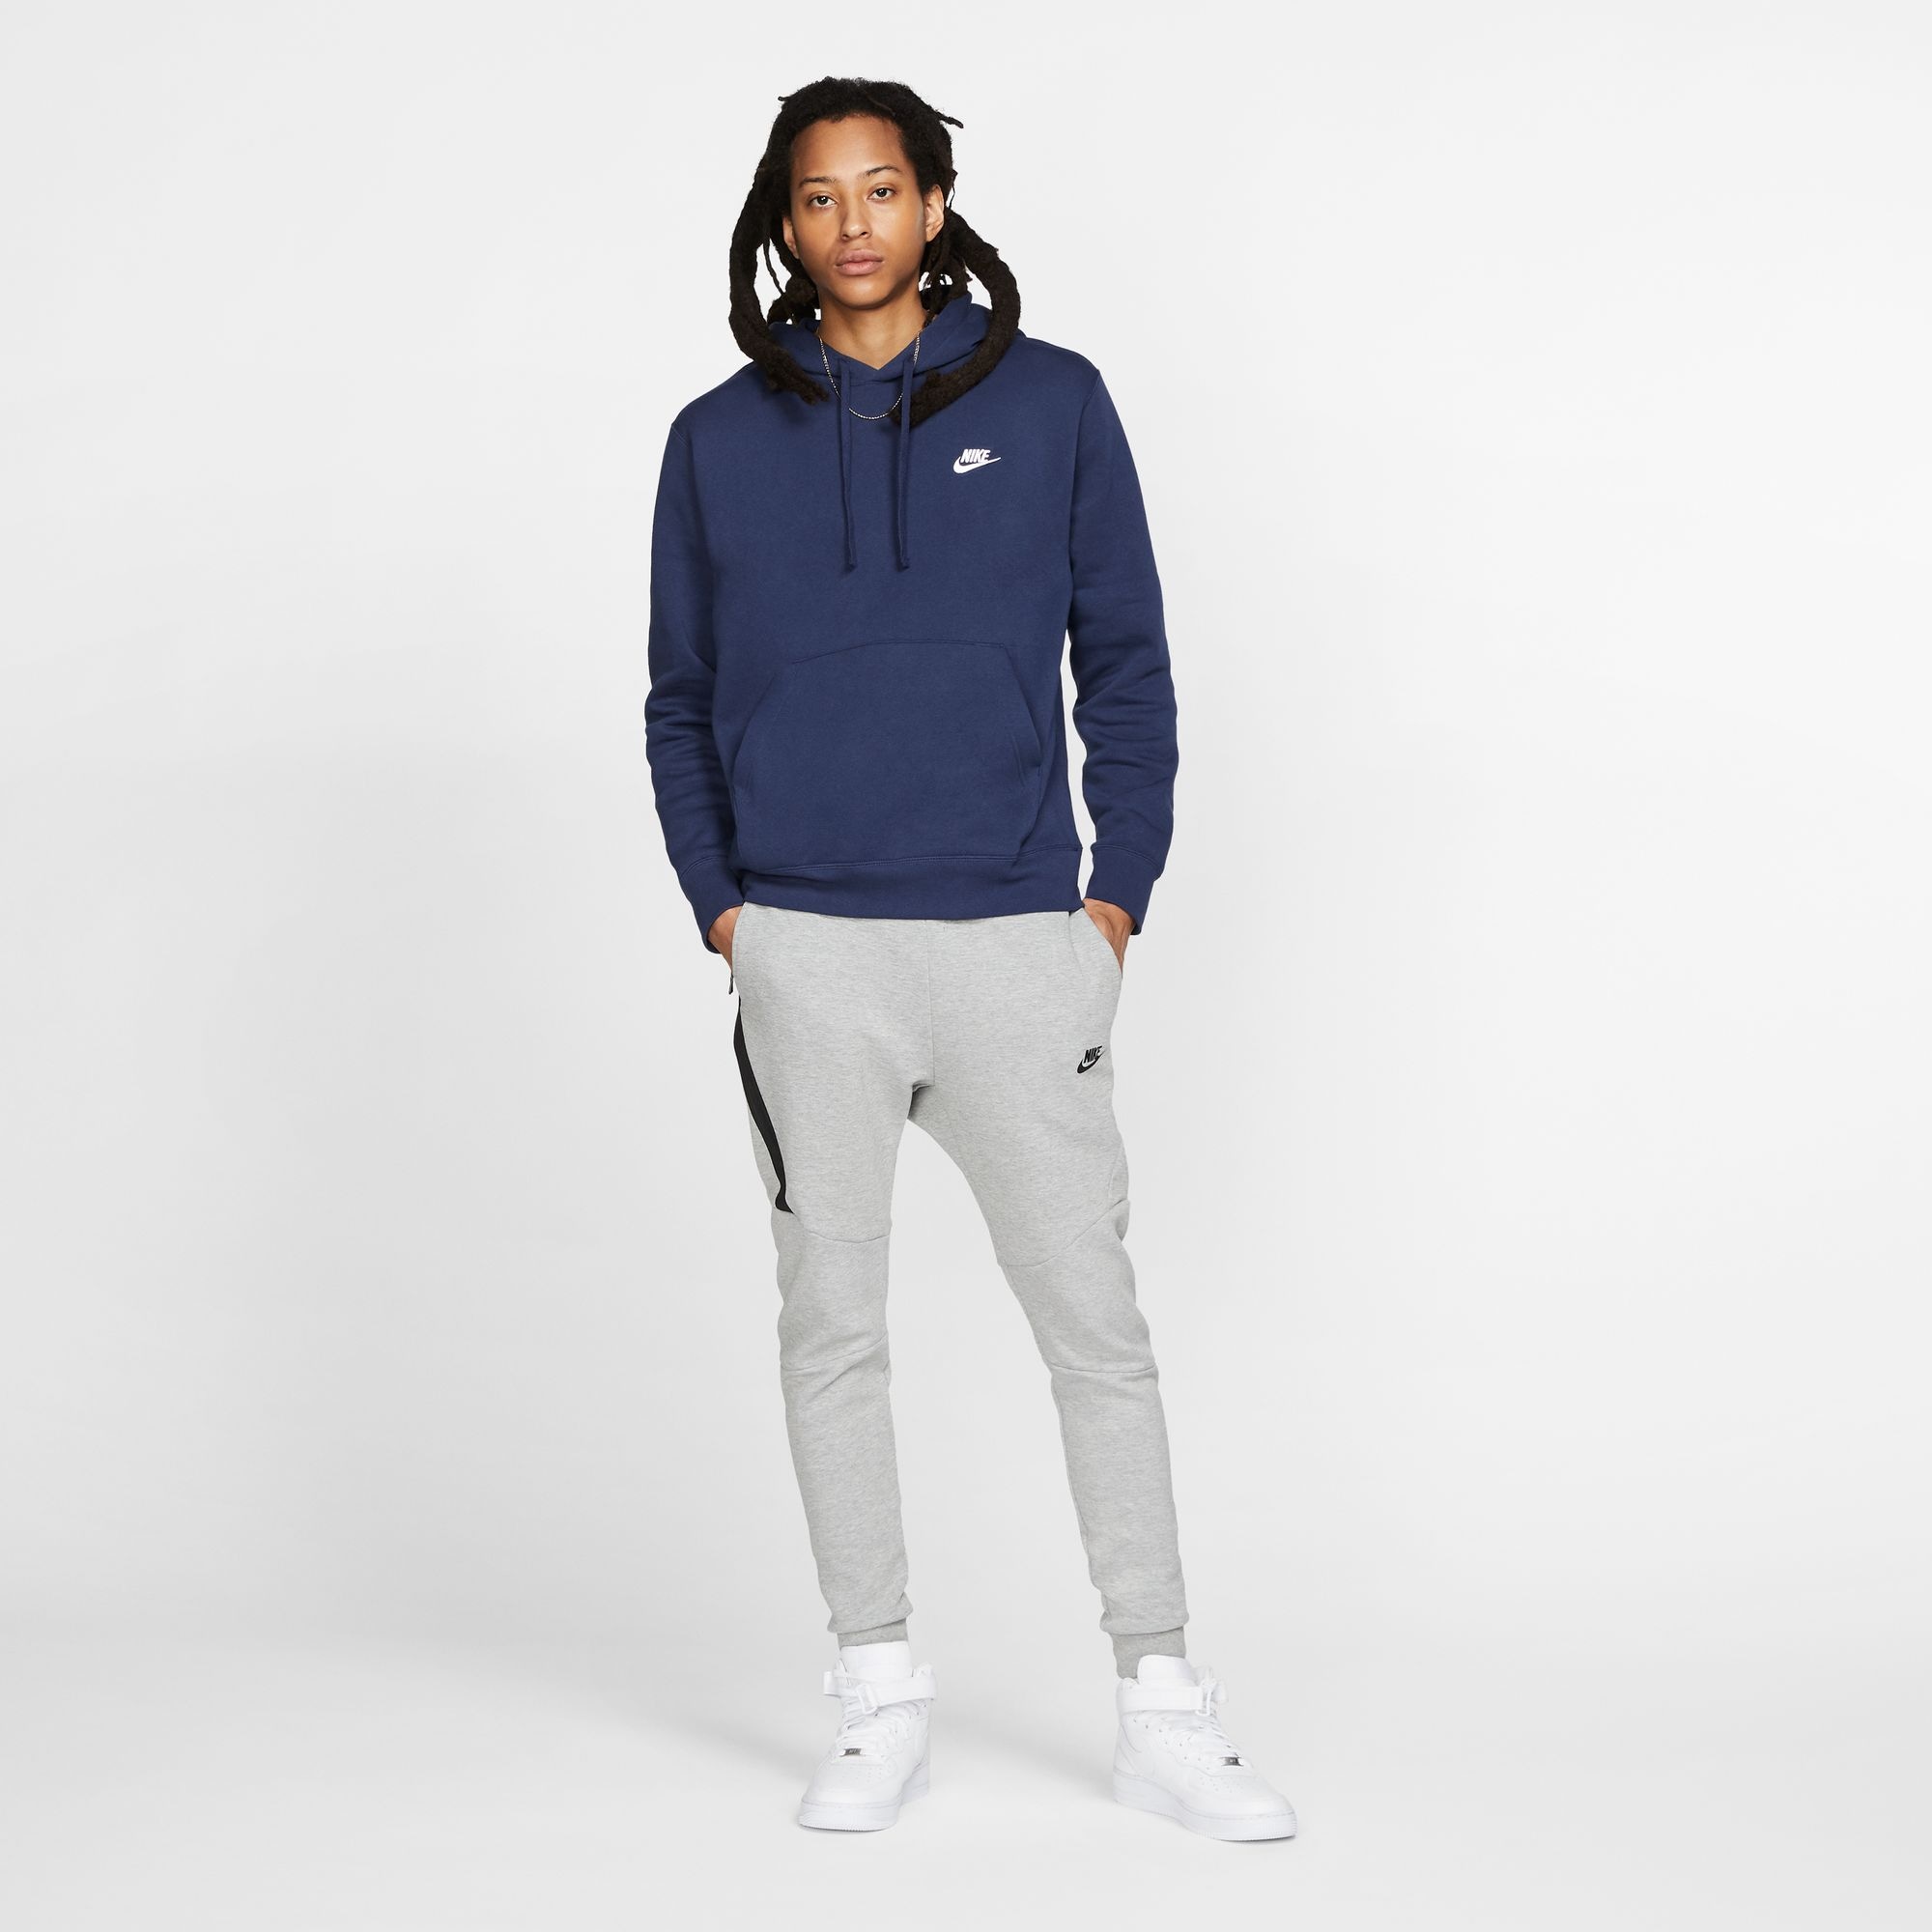 OTTO PULLOVER FLEECE »CLUB HOODIE« Kapuzensweatshirt kaufen Nike online bei Sportswear